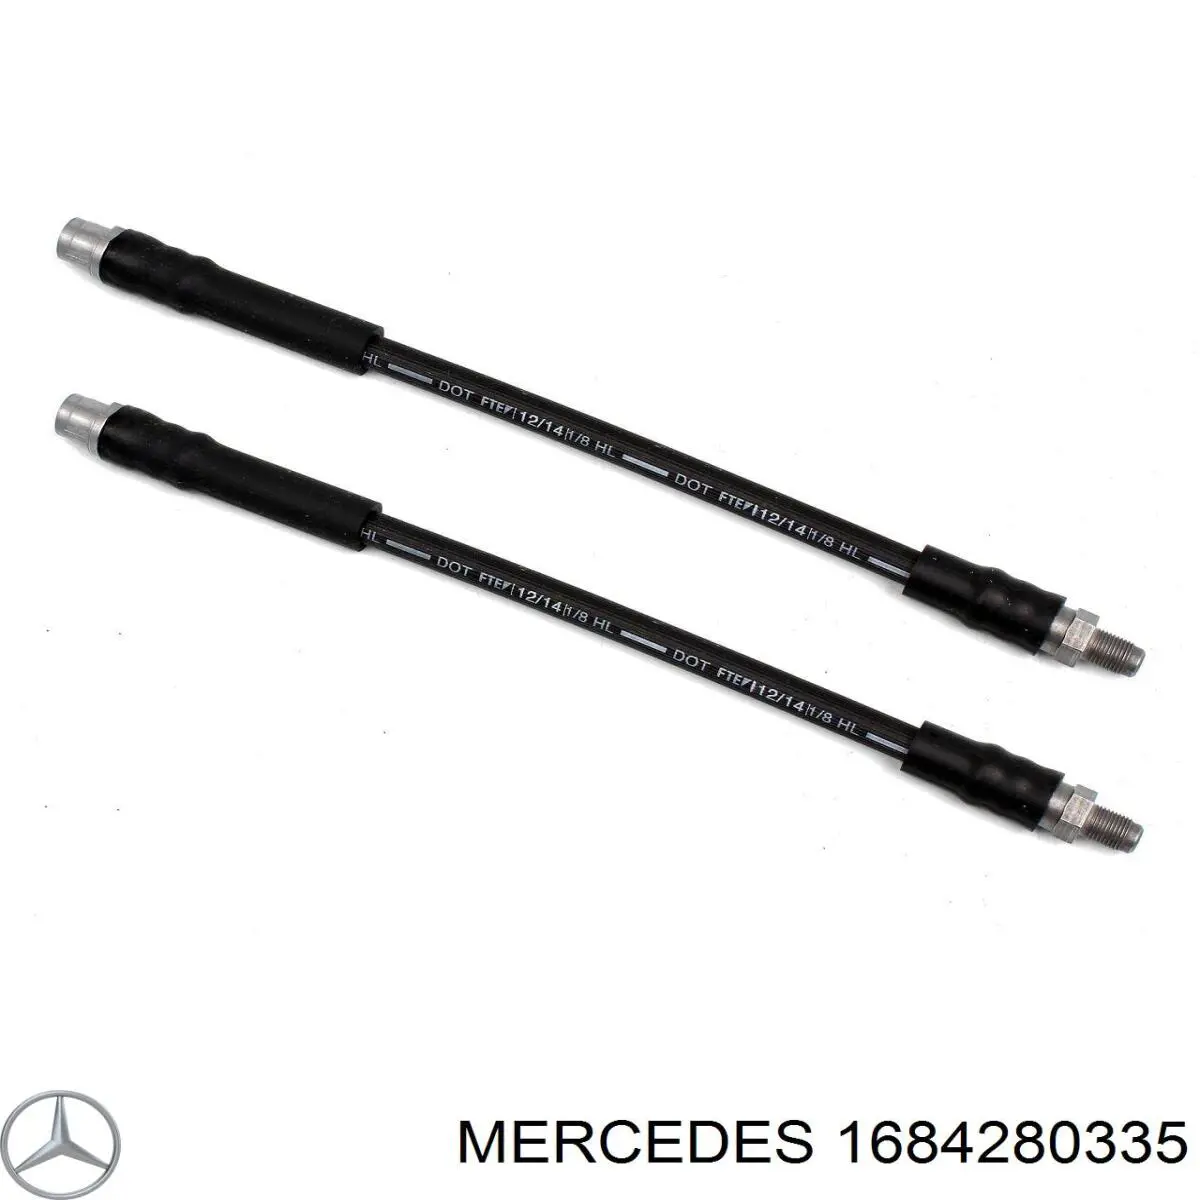 1684280335 Mercedes latiguillo de freno delantero